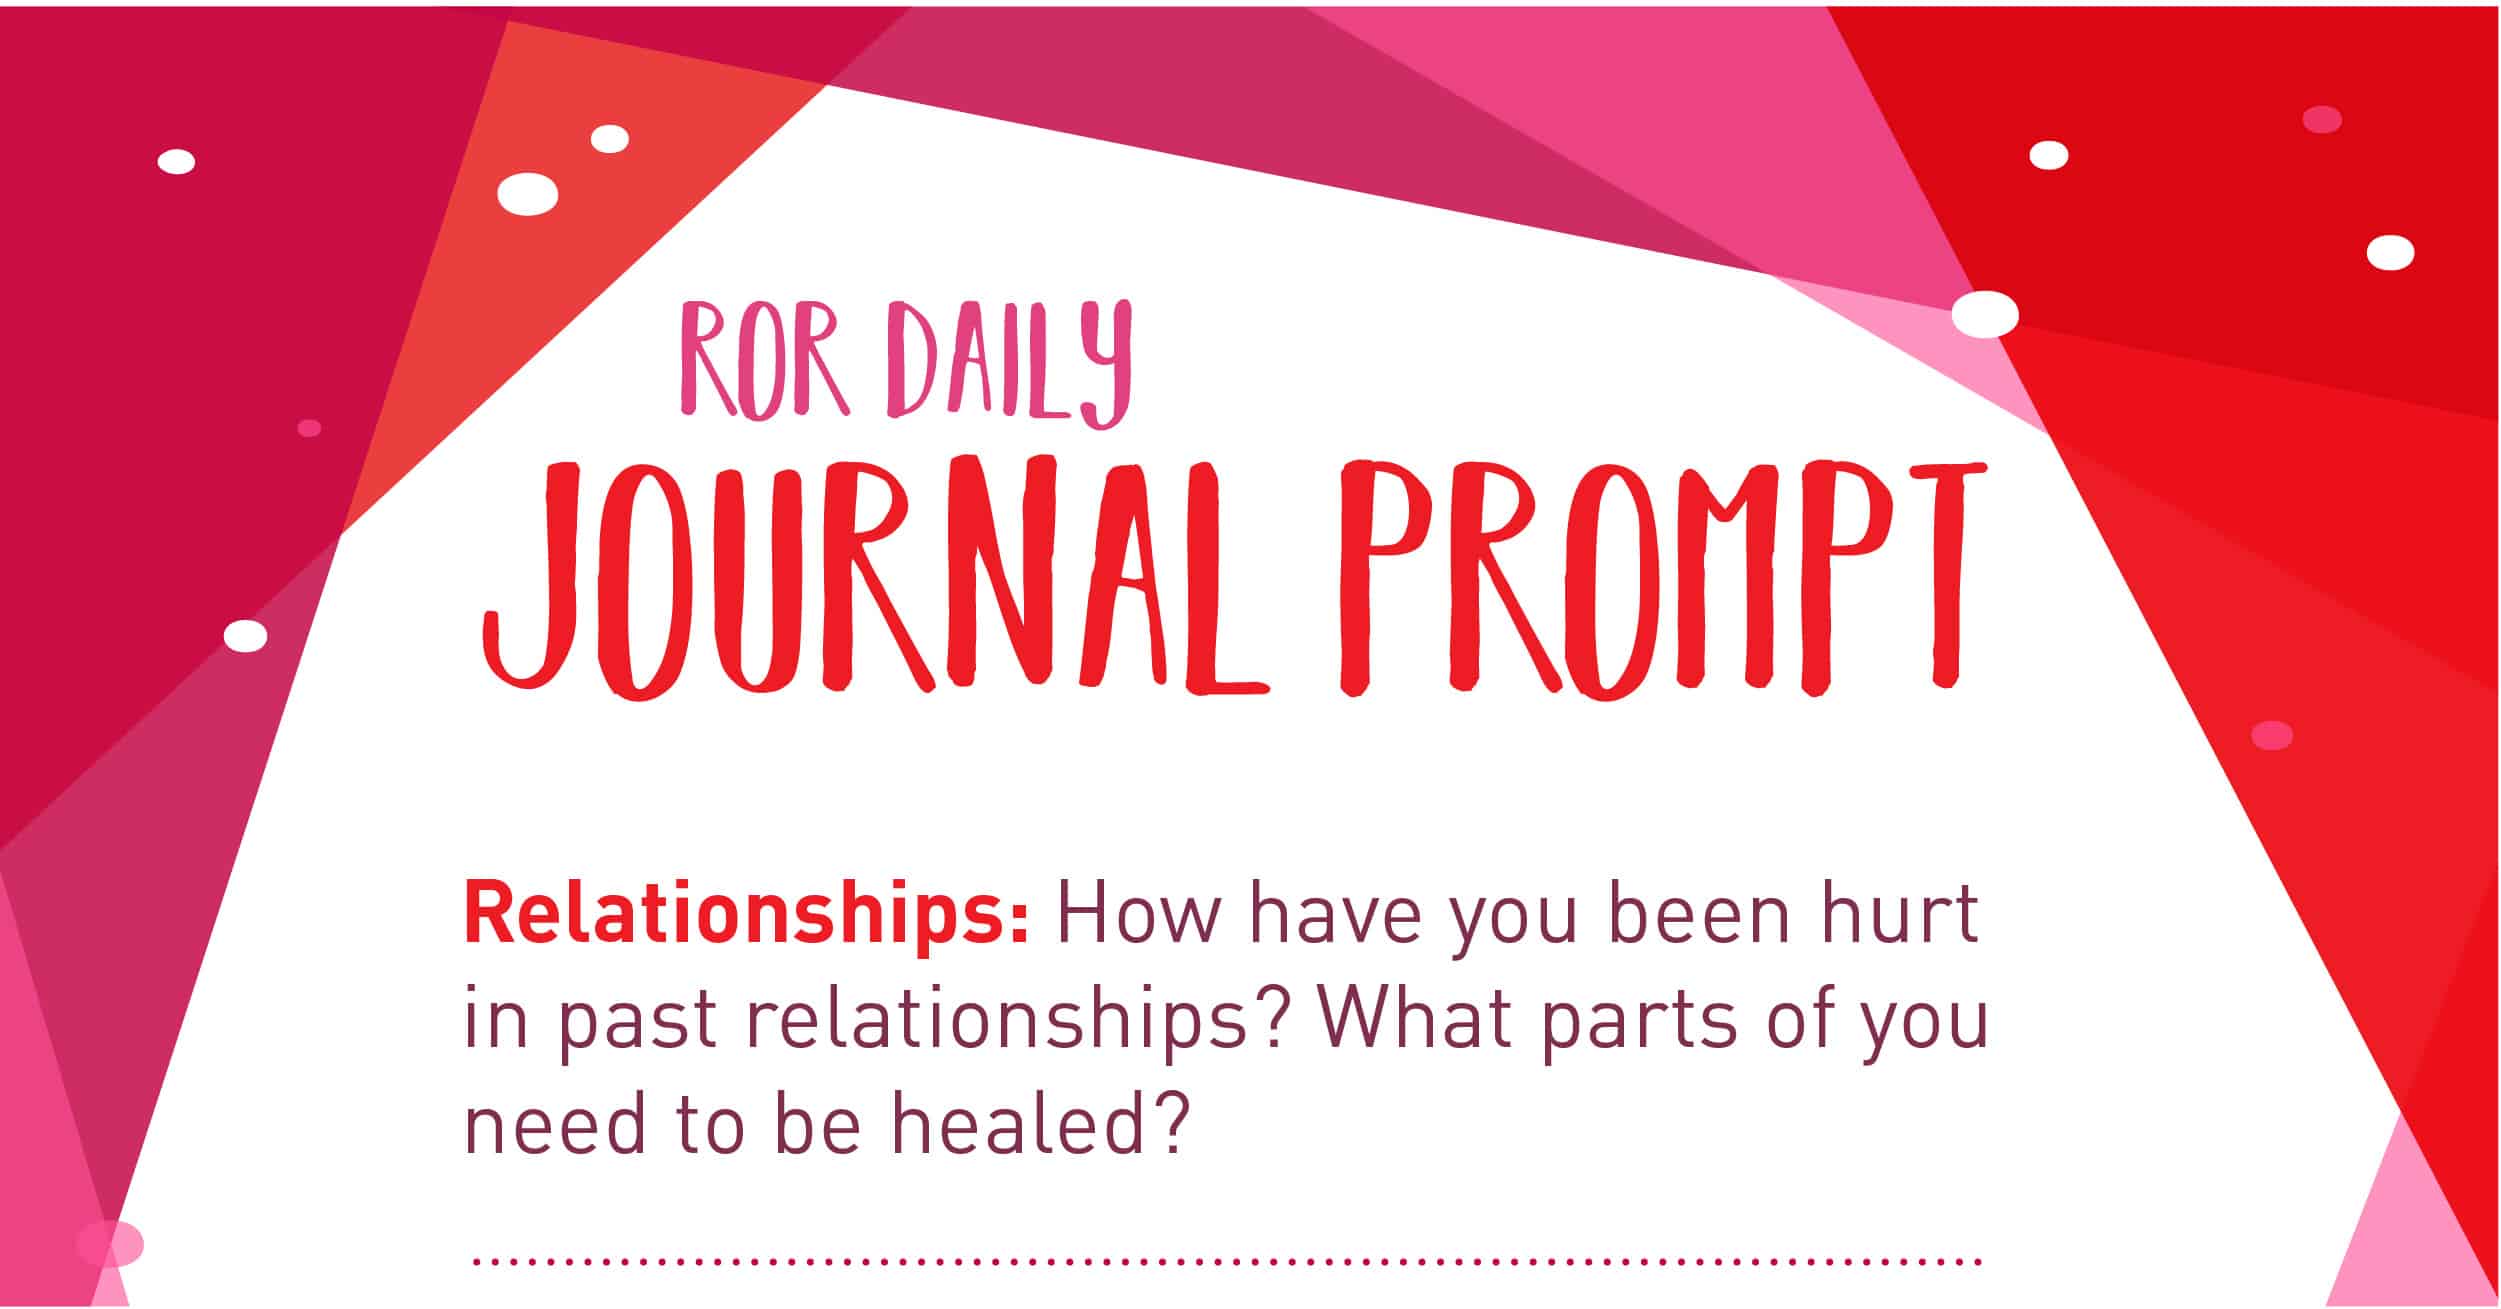 Journal Promp relationship